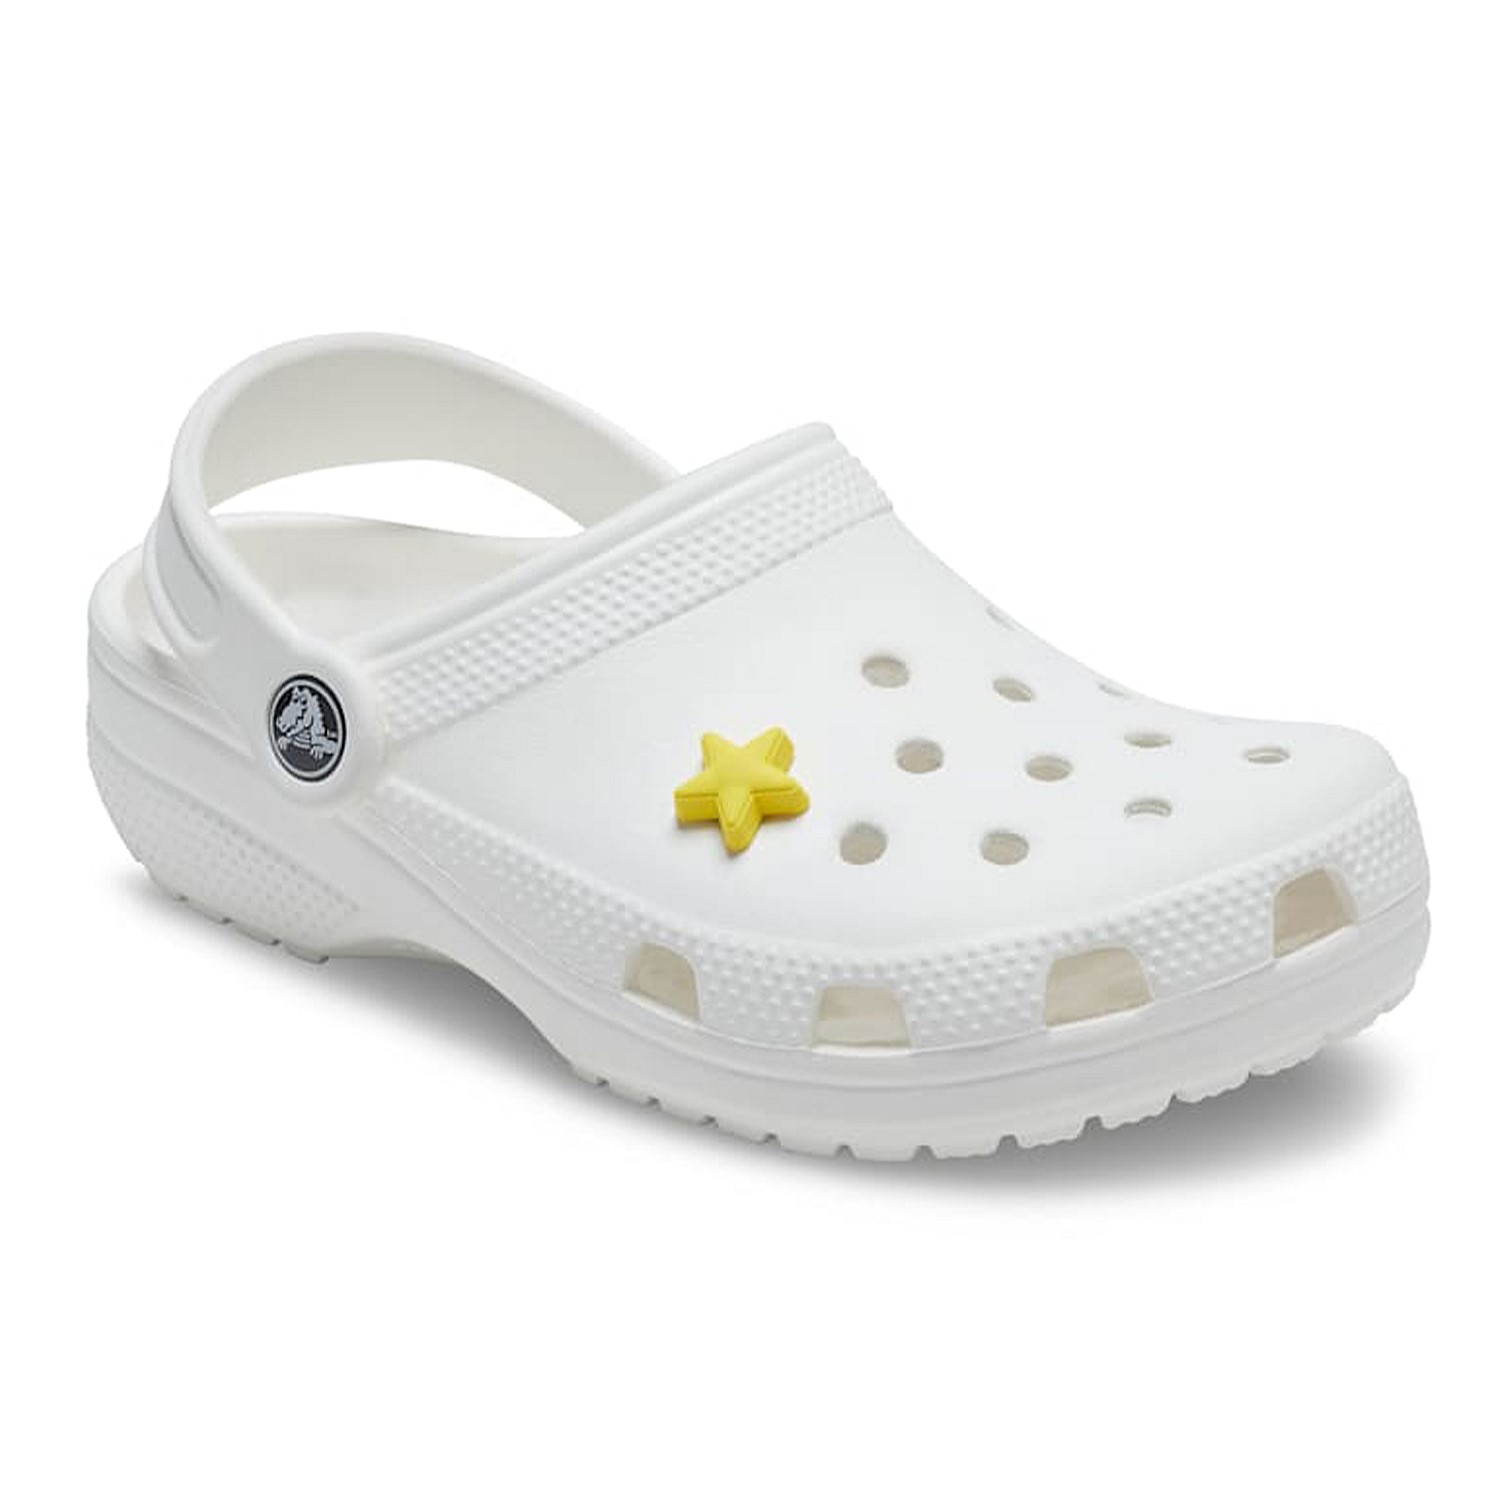 Footwear Accessories - Jibbitz Little Yellow Star